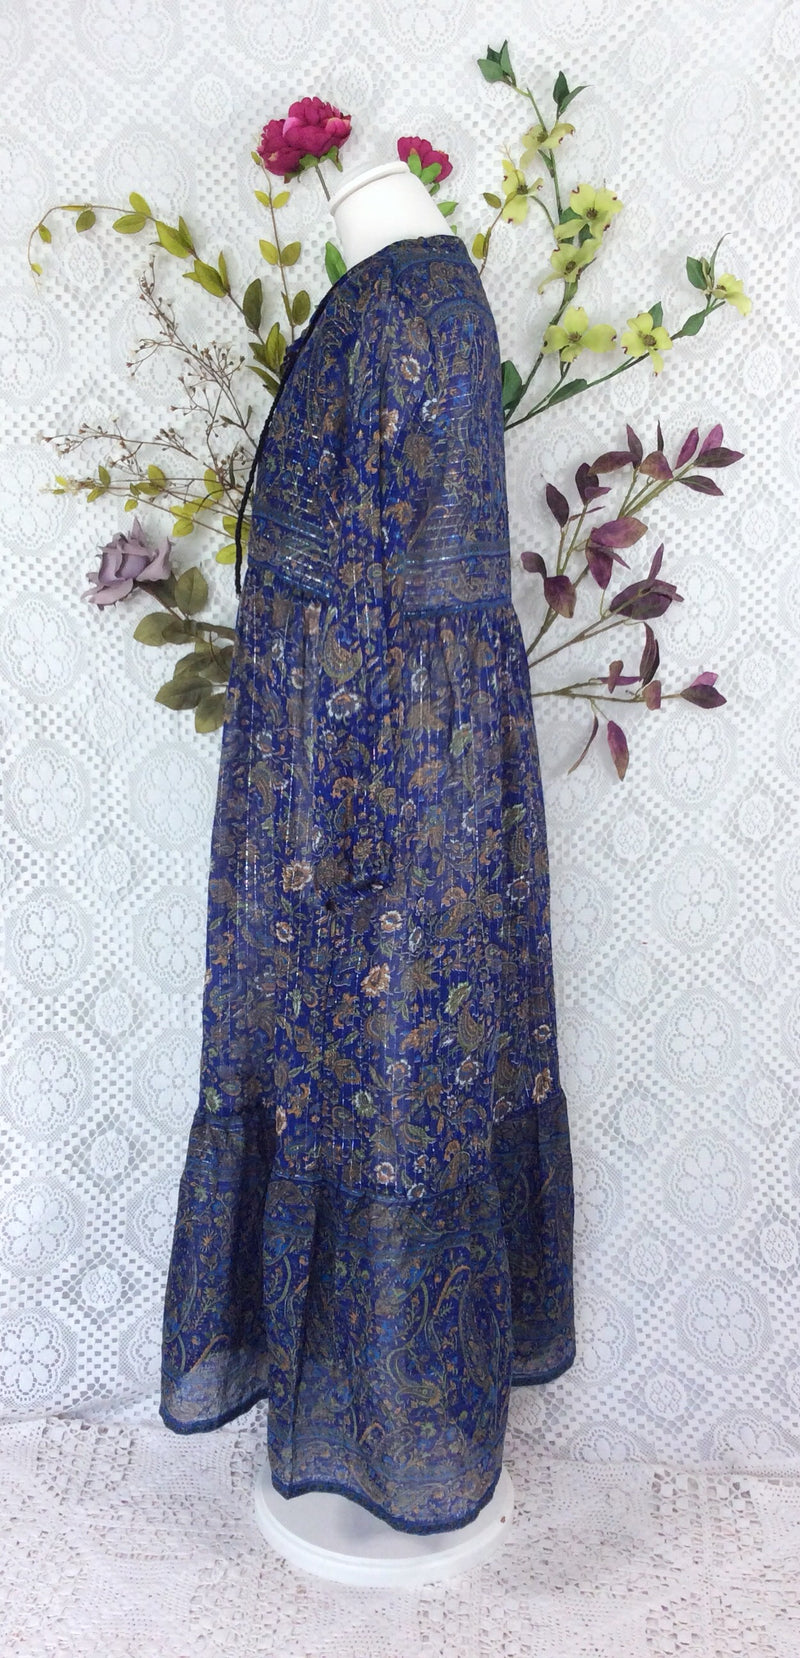 SALE Florence Dress - Sparkly Indian Cotton Smock Dress - Midnight Blue & Sage - Size XS